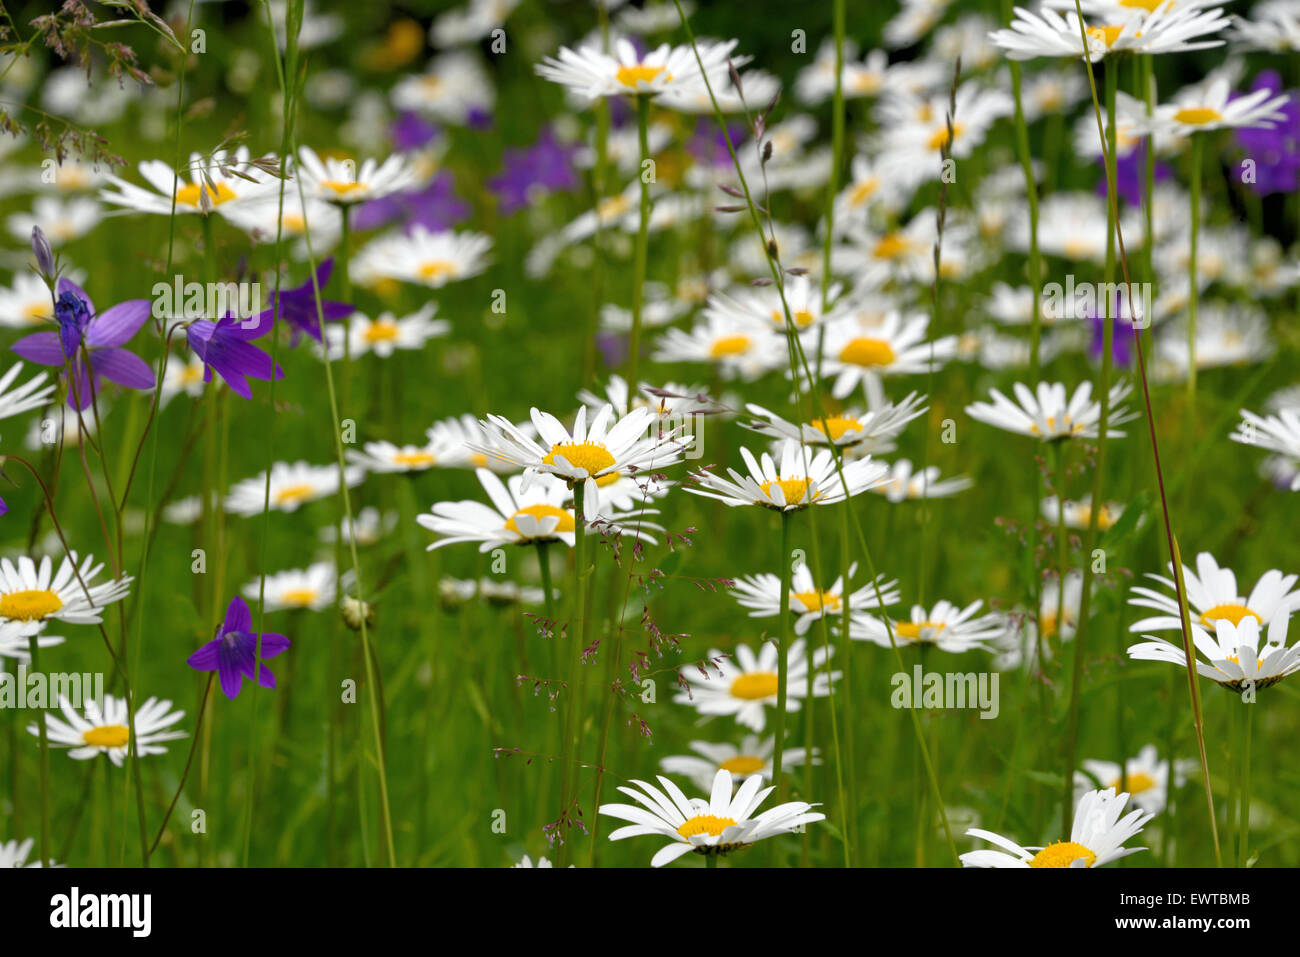 Oxeye daisy (Leucanthemum vulgare) flowers in green grass Stock Photo